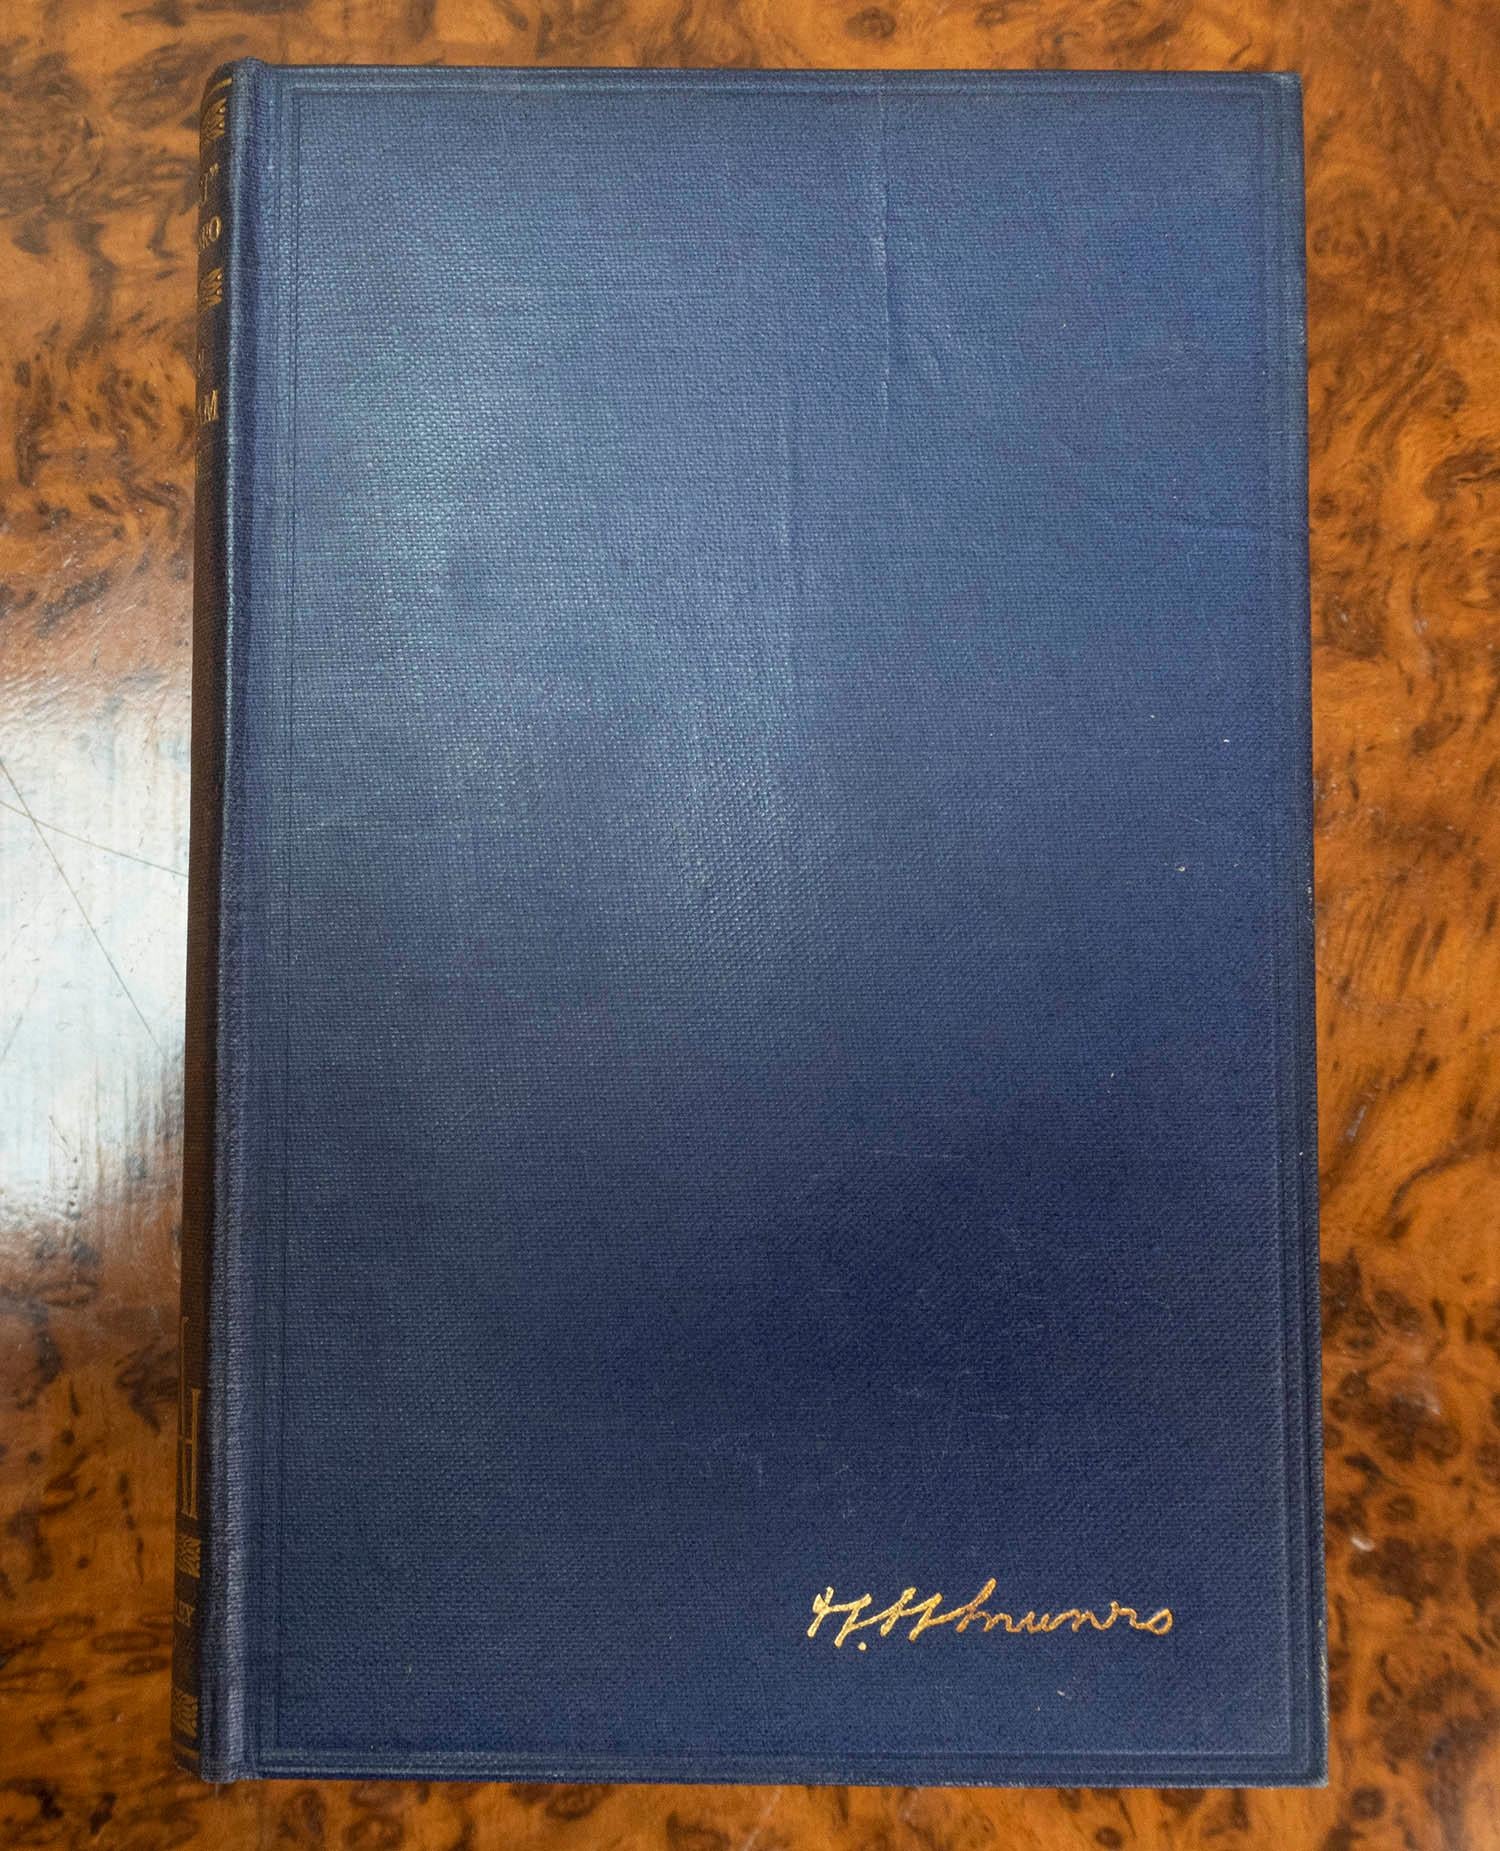 Anglais Ensemble de 6 livres reliés en tissu bleu. Les œuvres de H.H Munro « Saraki », vers 1927 en vente